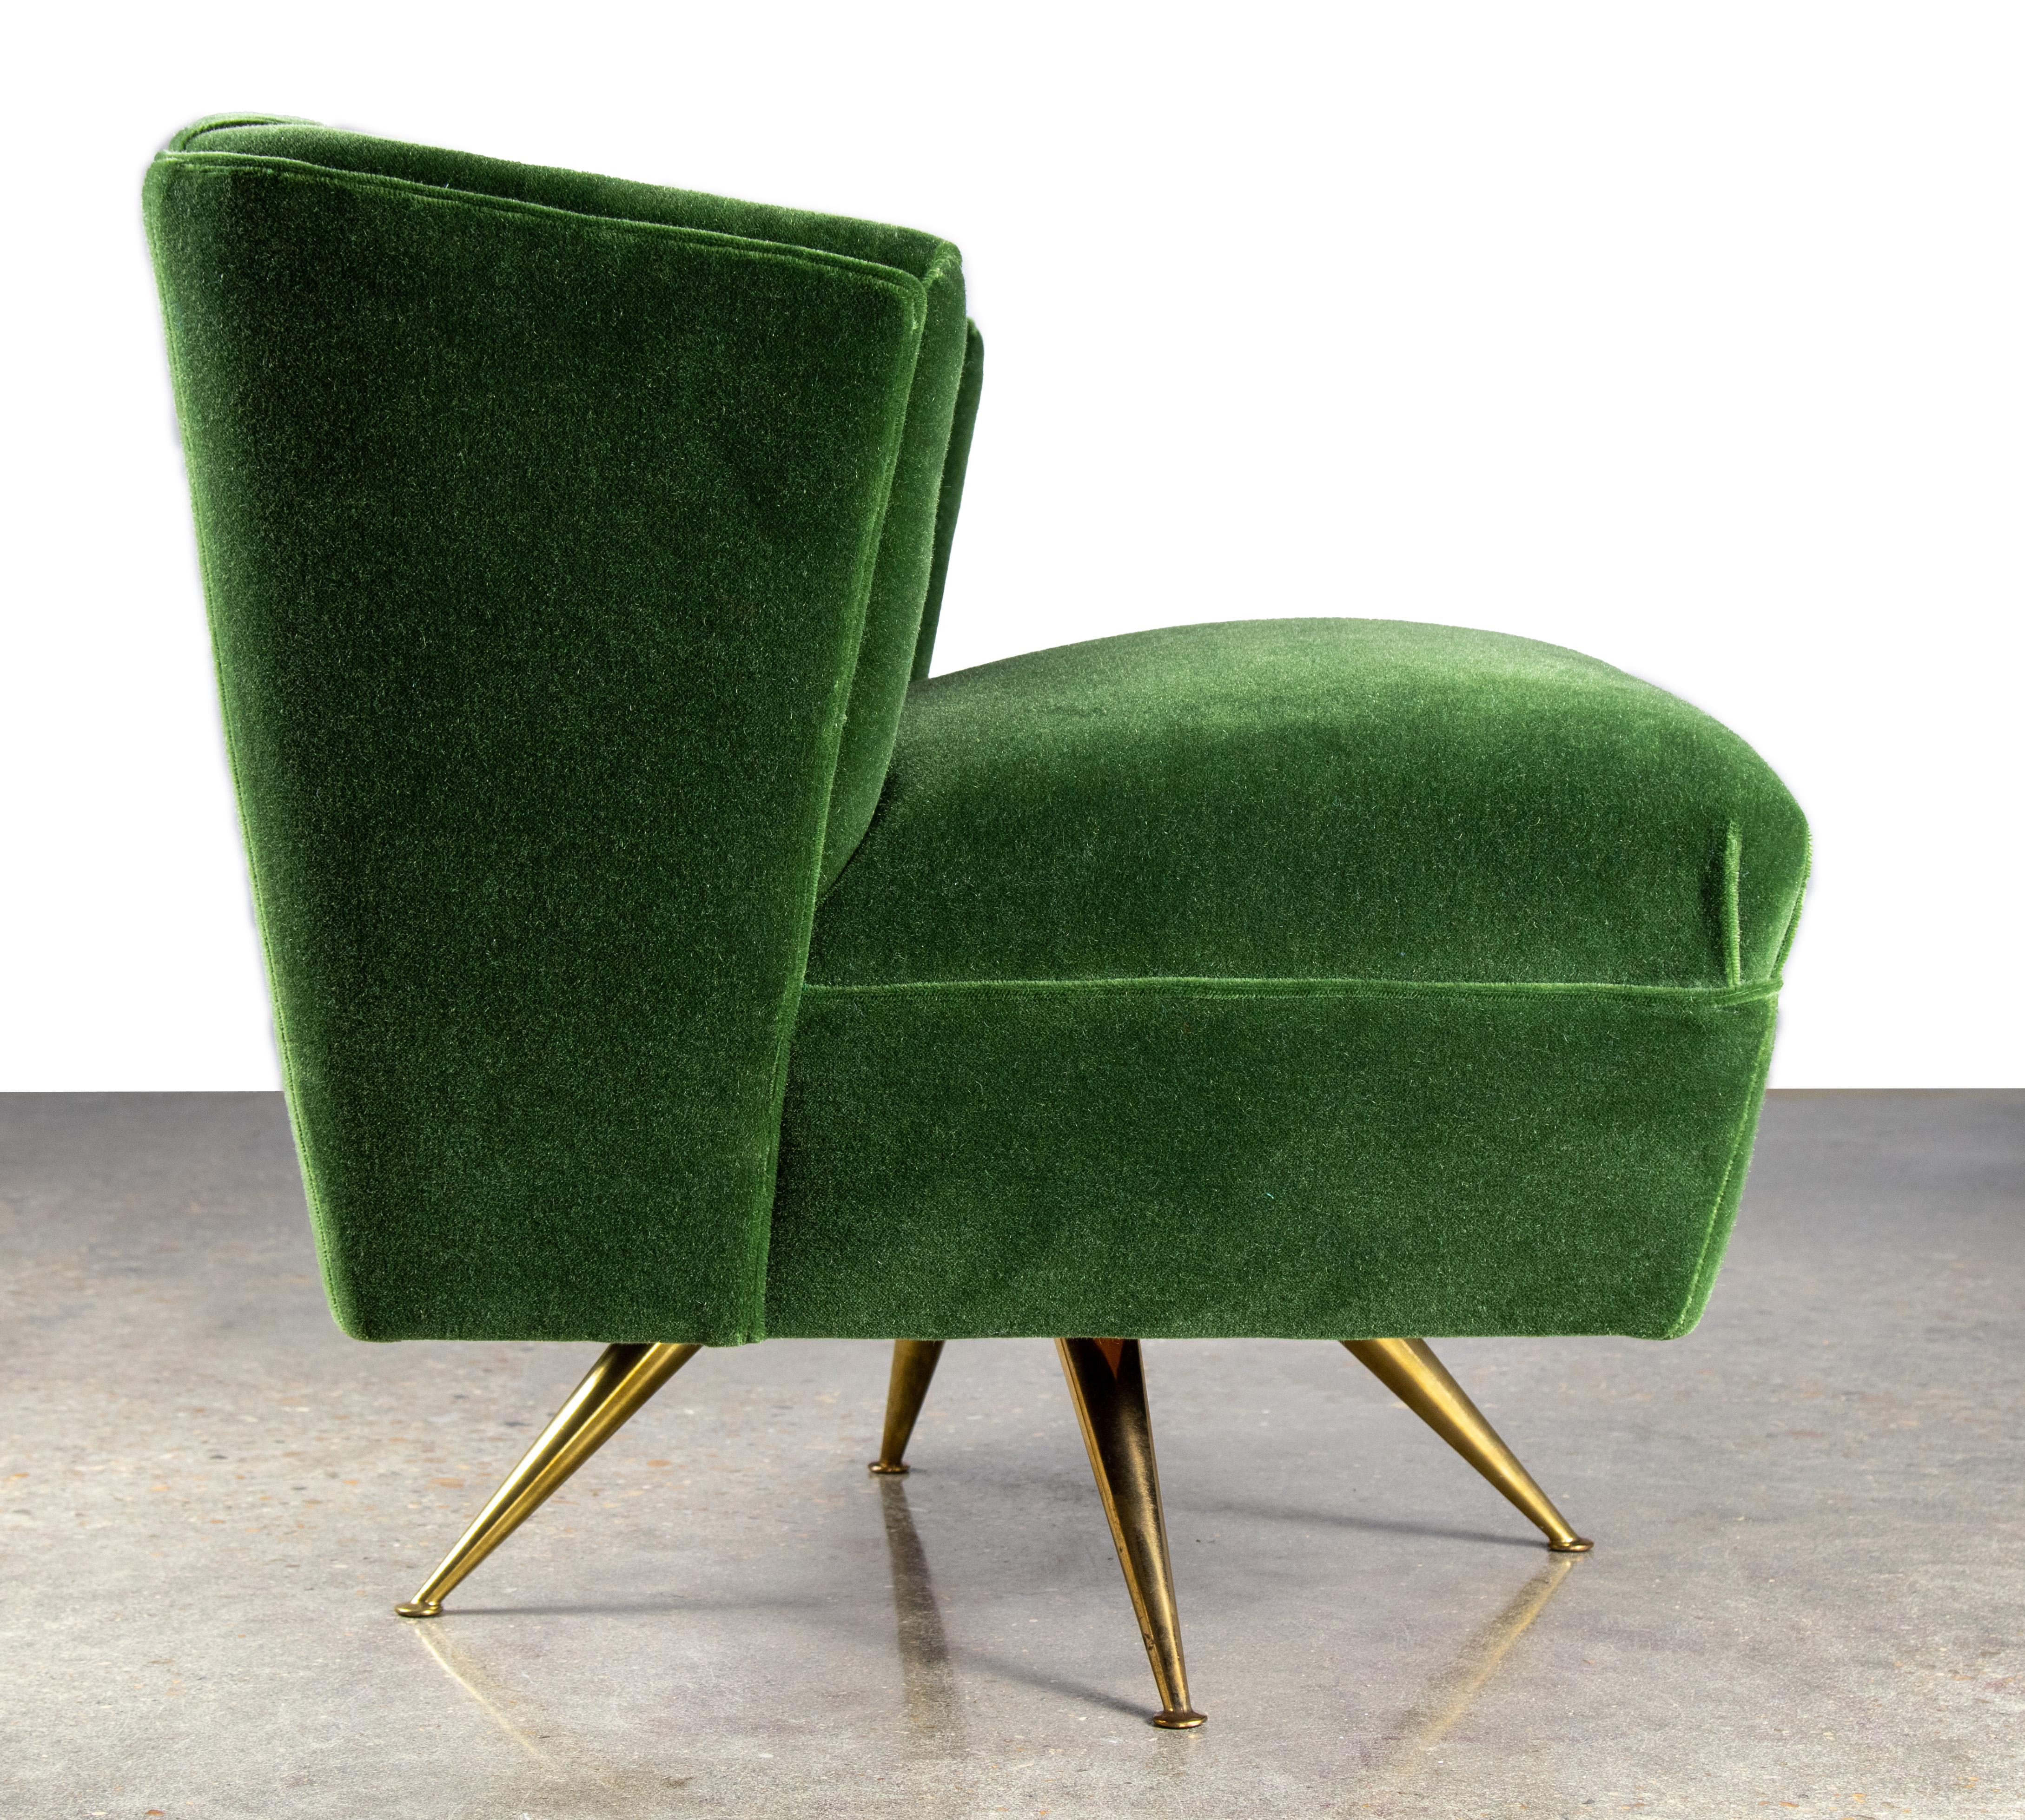 Milieu du XXe siècle 1950s Henry P Glass Swivel Lounge Chair Green Mohair on brass legs JL Chase Co. en vente